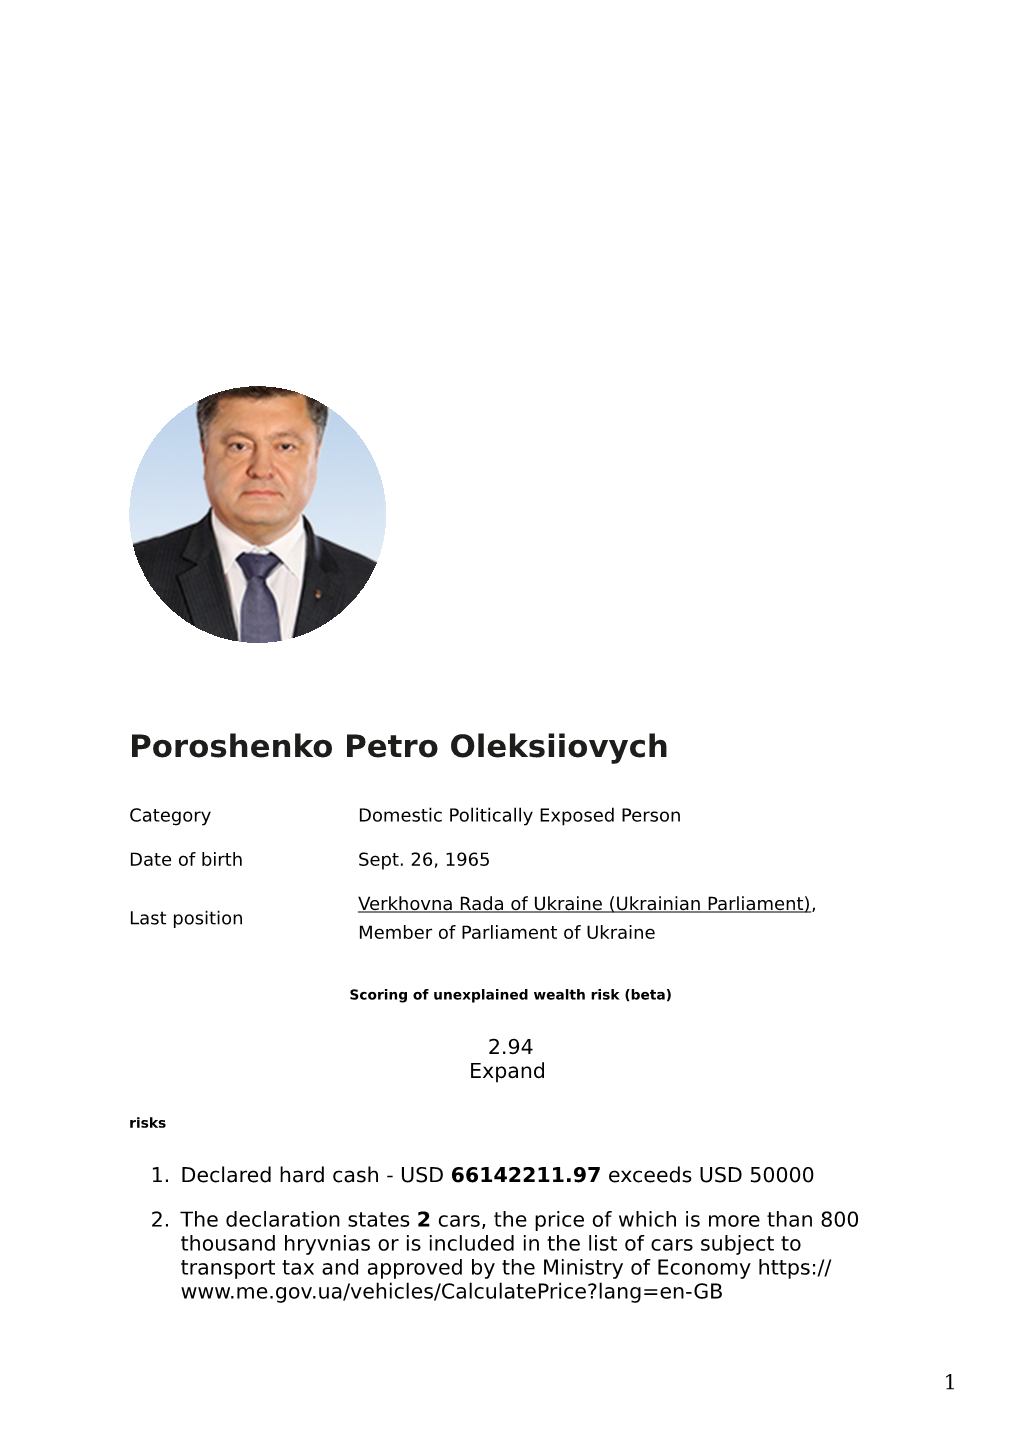 PEP: Dossier Poroshenko Petro Oleksiiovych, Verkhovna Rada Of